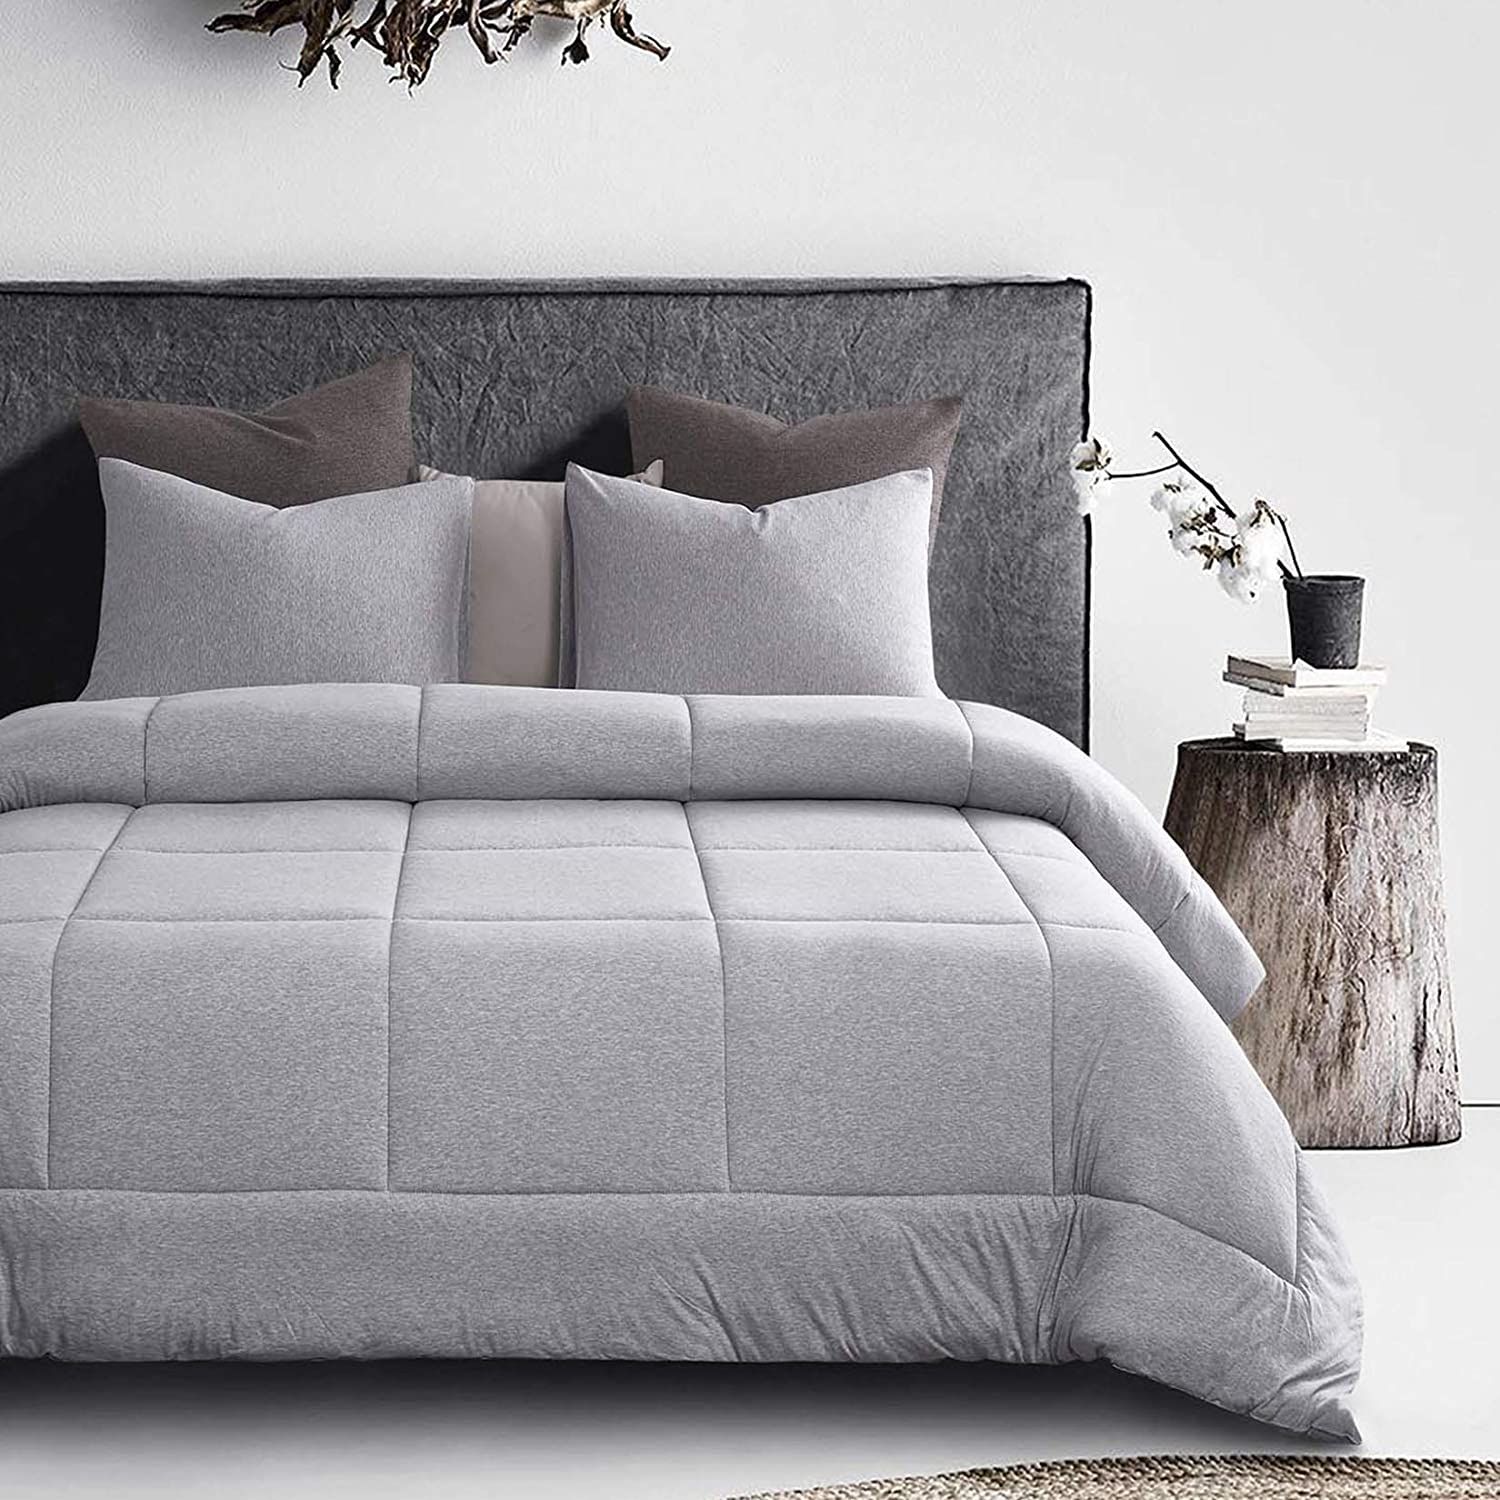 Wake In Cloud - Jersey Cotton Comforter Set, Light Gray Grey Plain ...